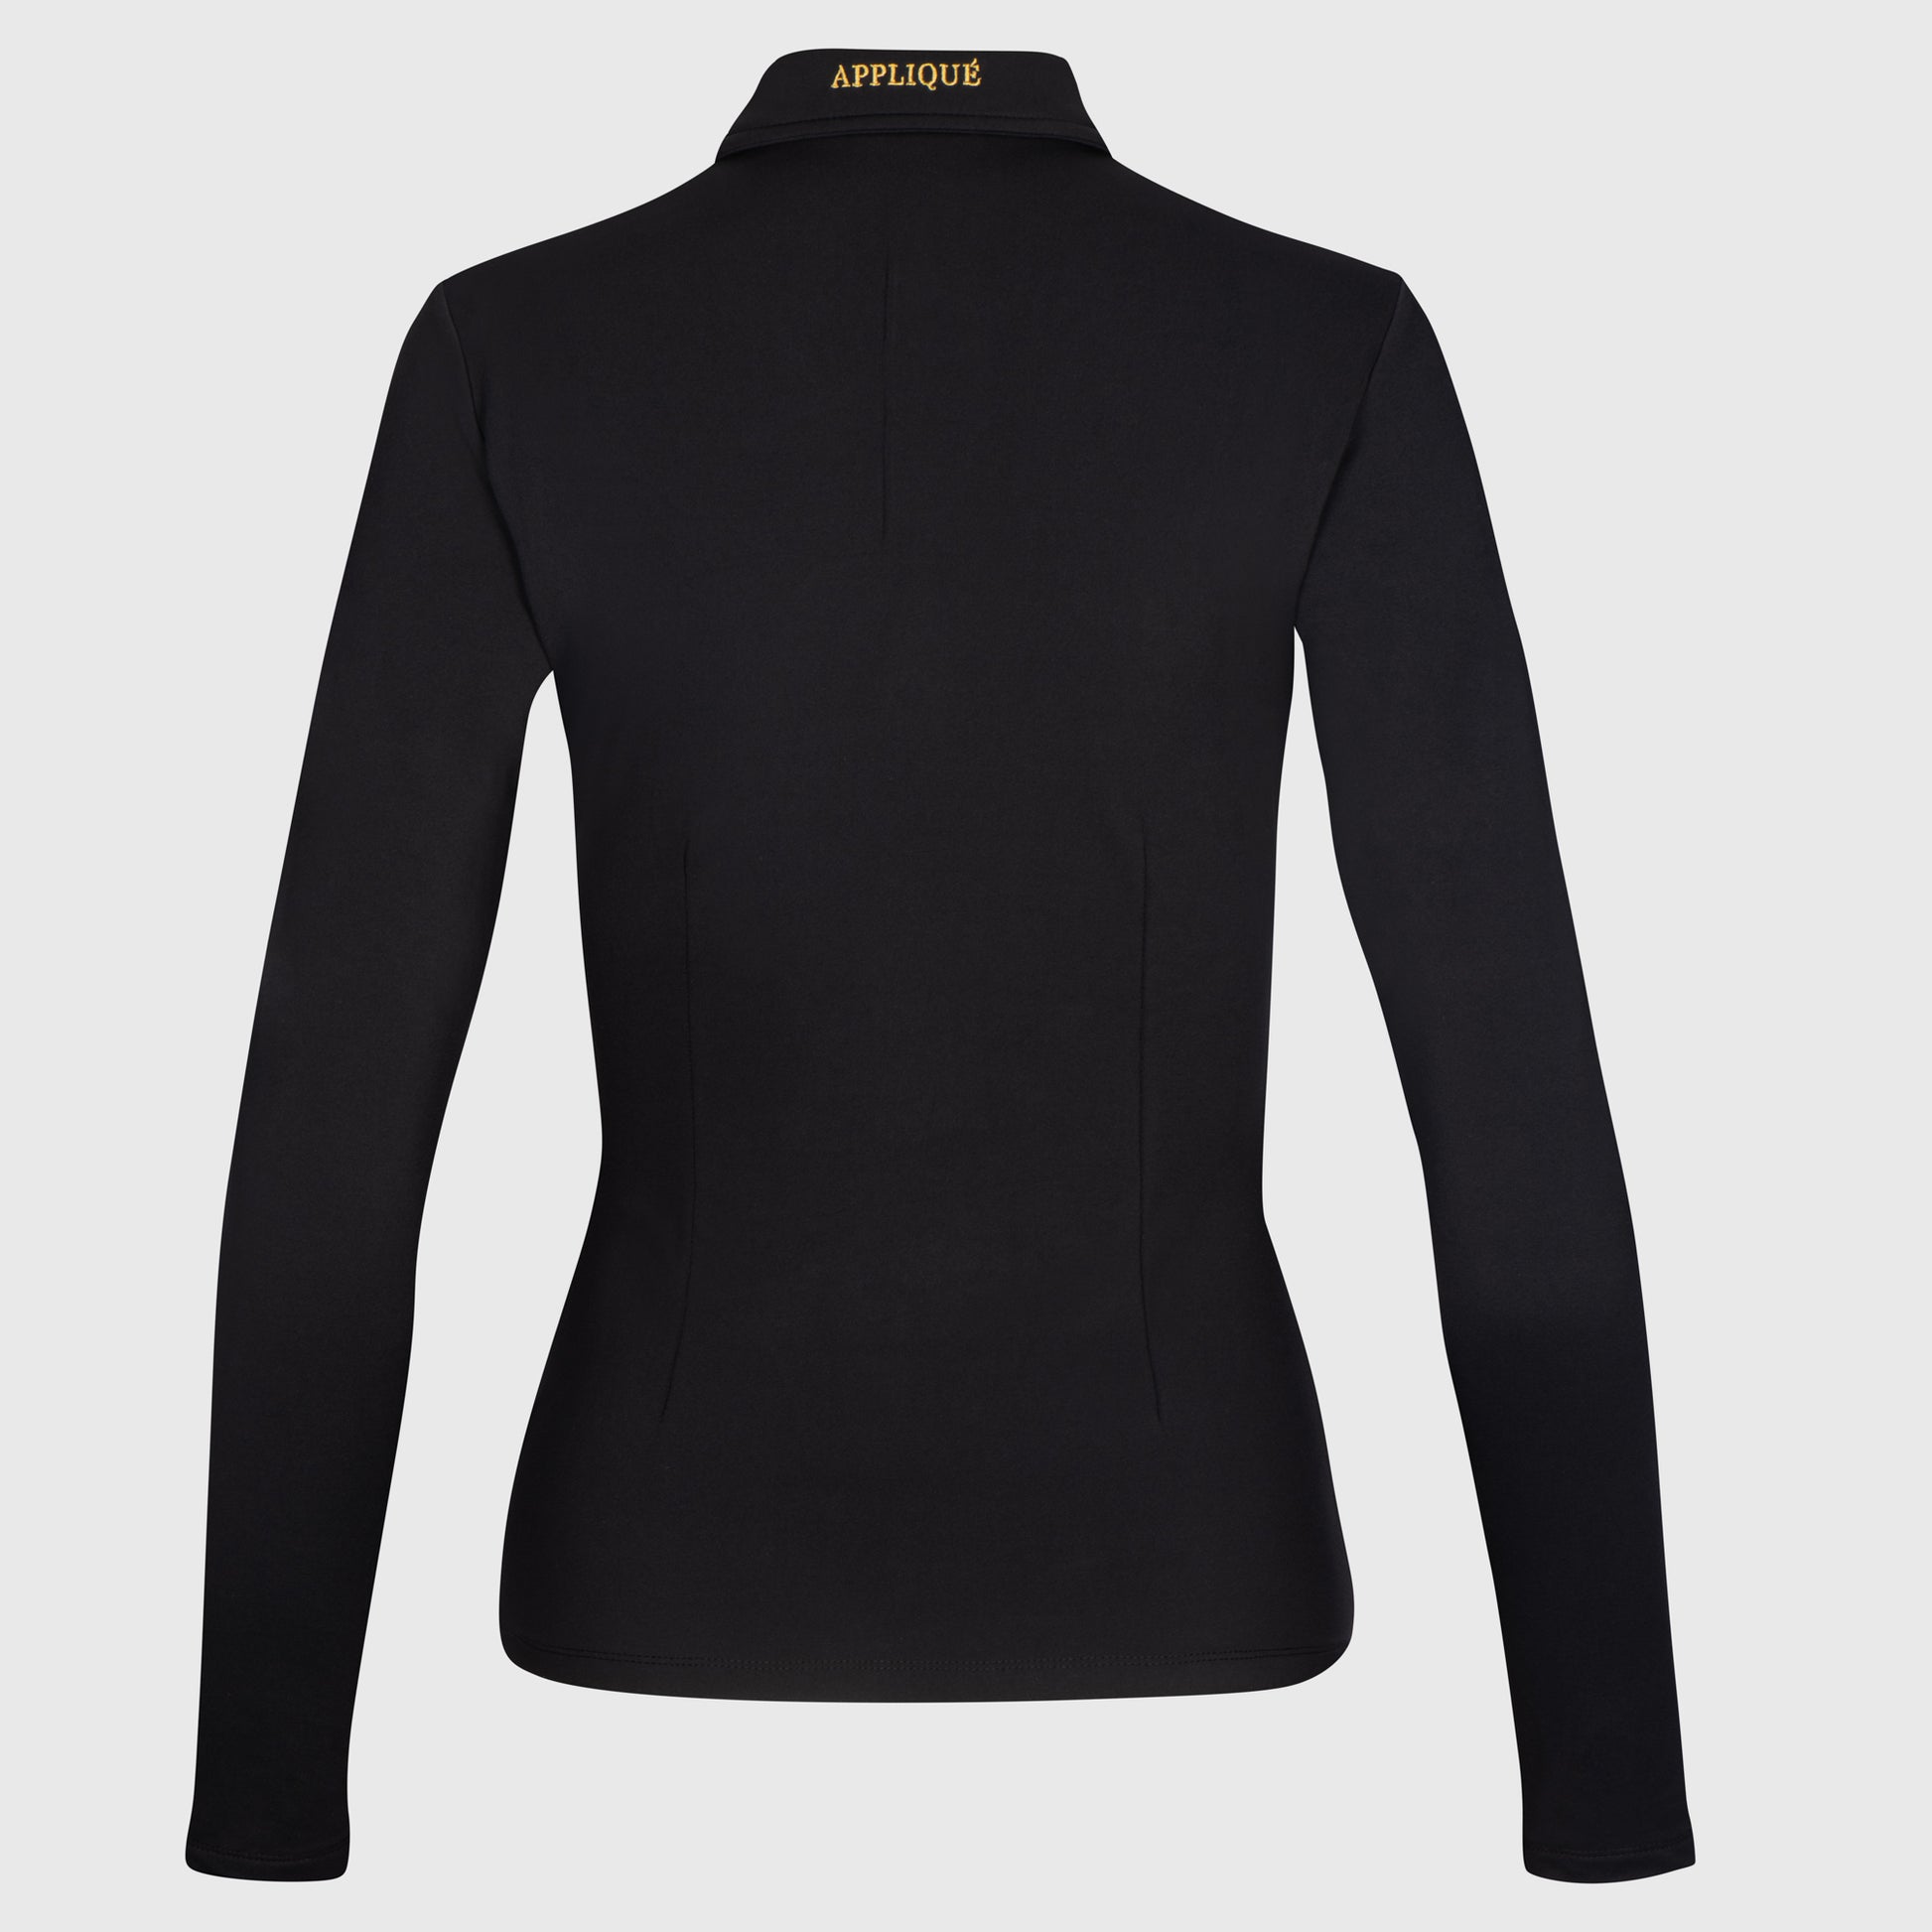 Appliqué Amsterdam - Poloshirt-Black-Women-Fleece-Warm